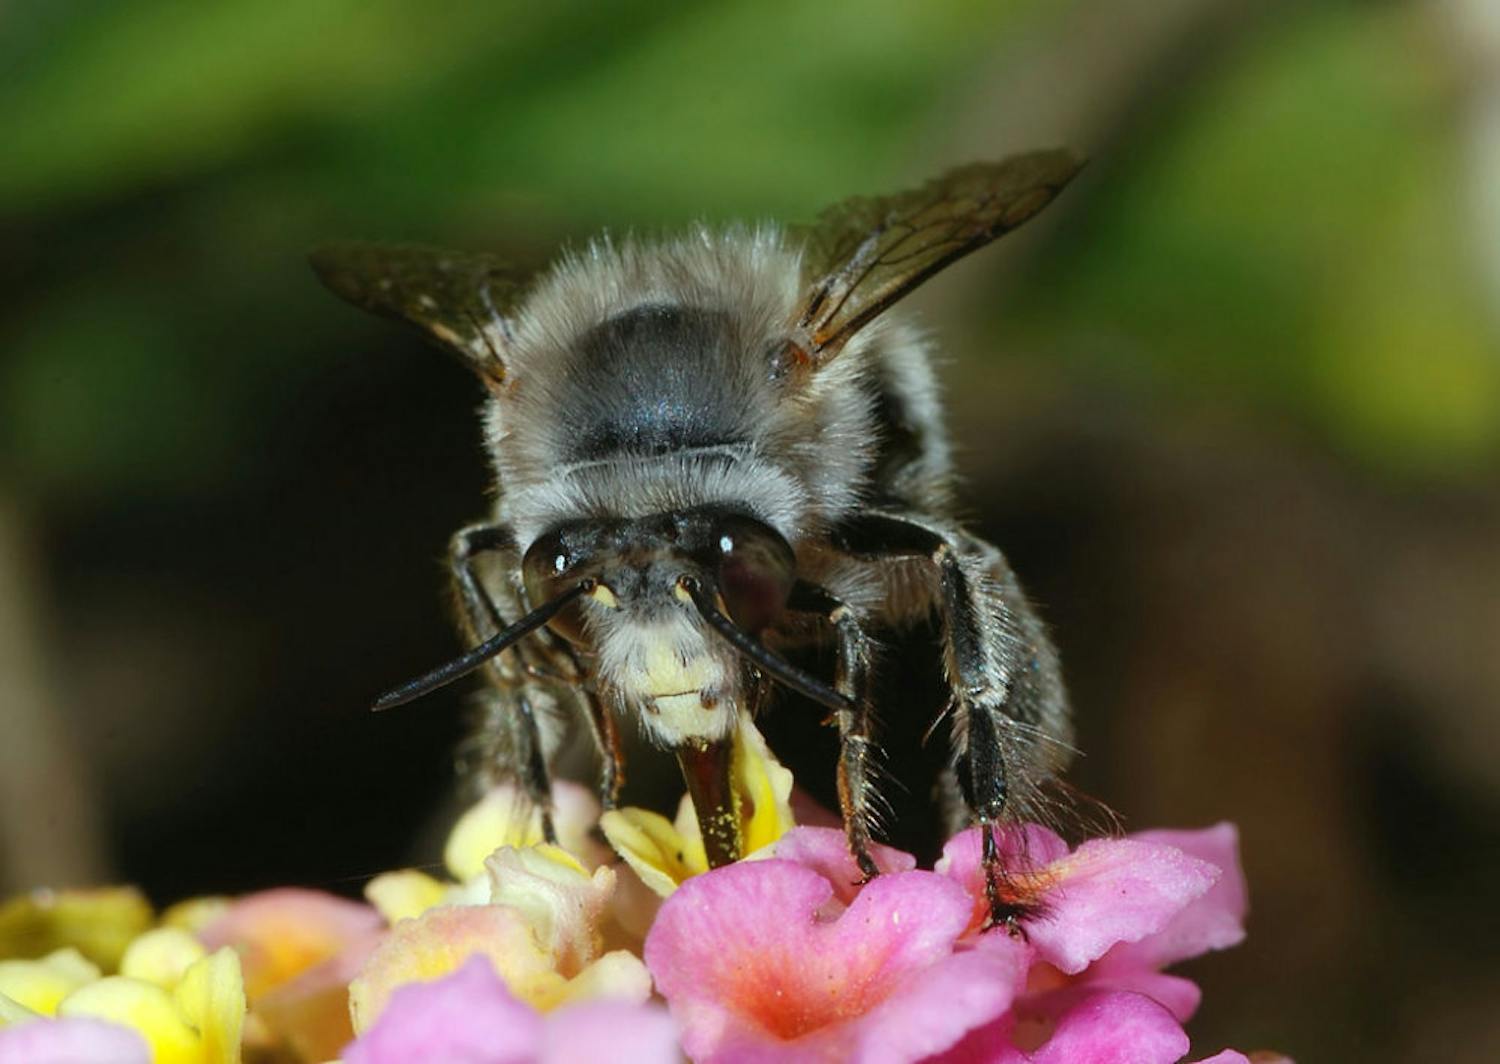 &nbsp;Anthophora plumipes a close relative to&nbsp;Anthophora abrupta or "Miner Bees"